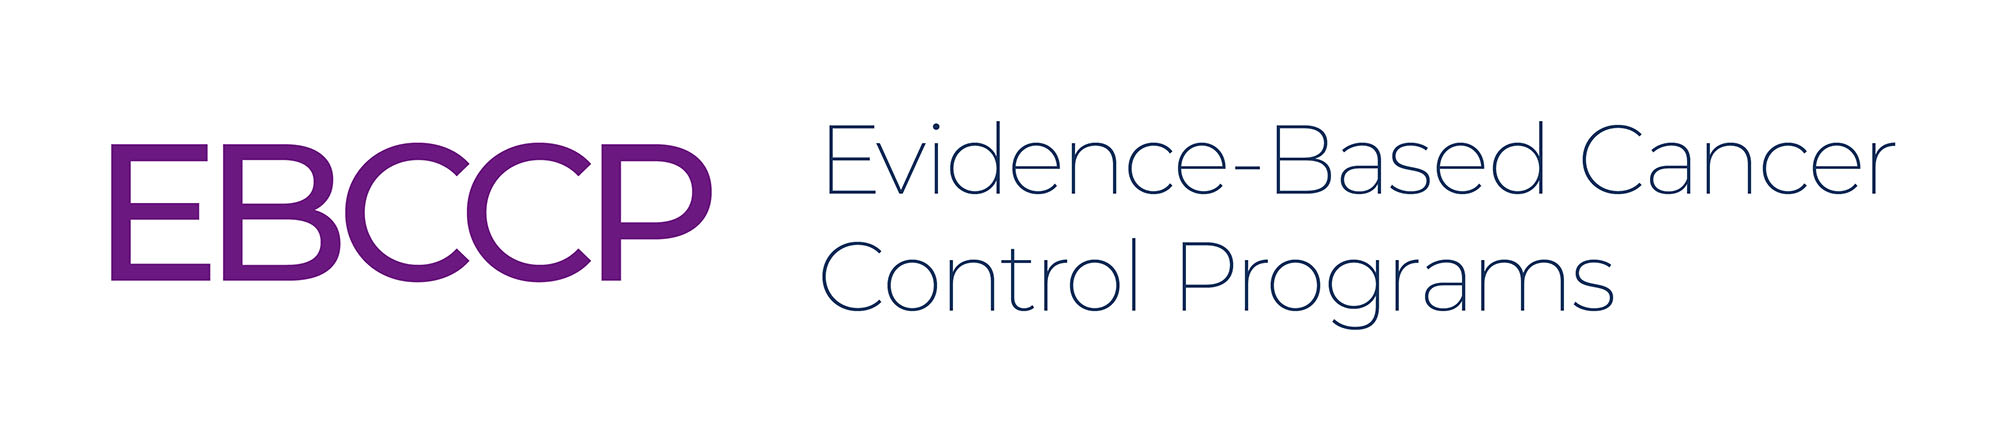 Evidence-Based Cancer Control Programs (EBCCP)